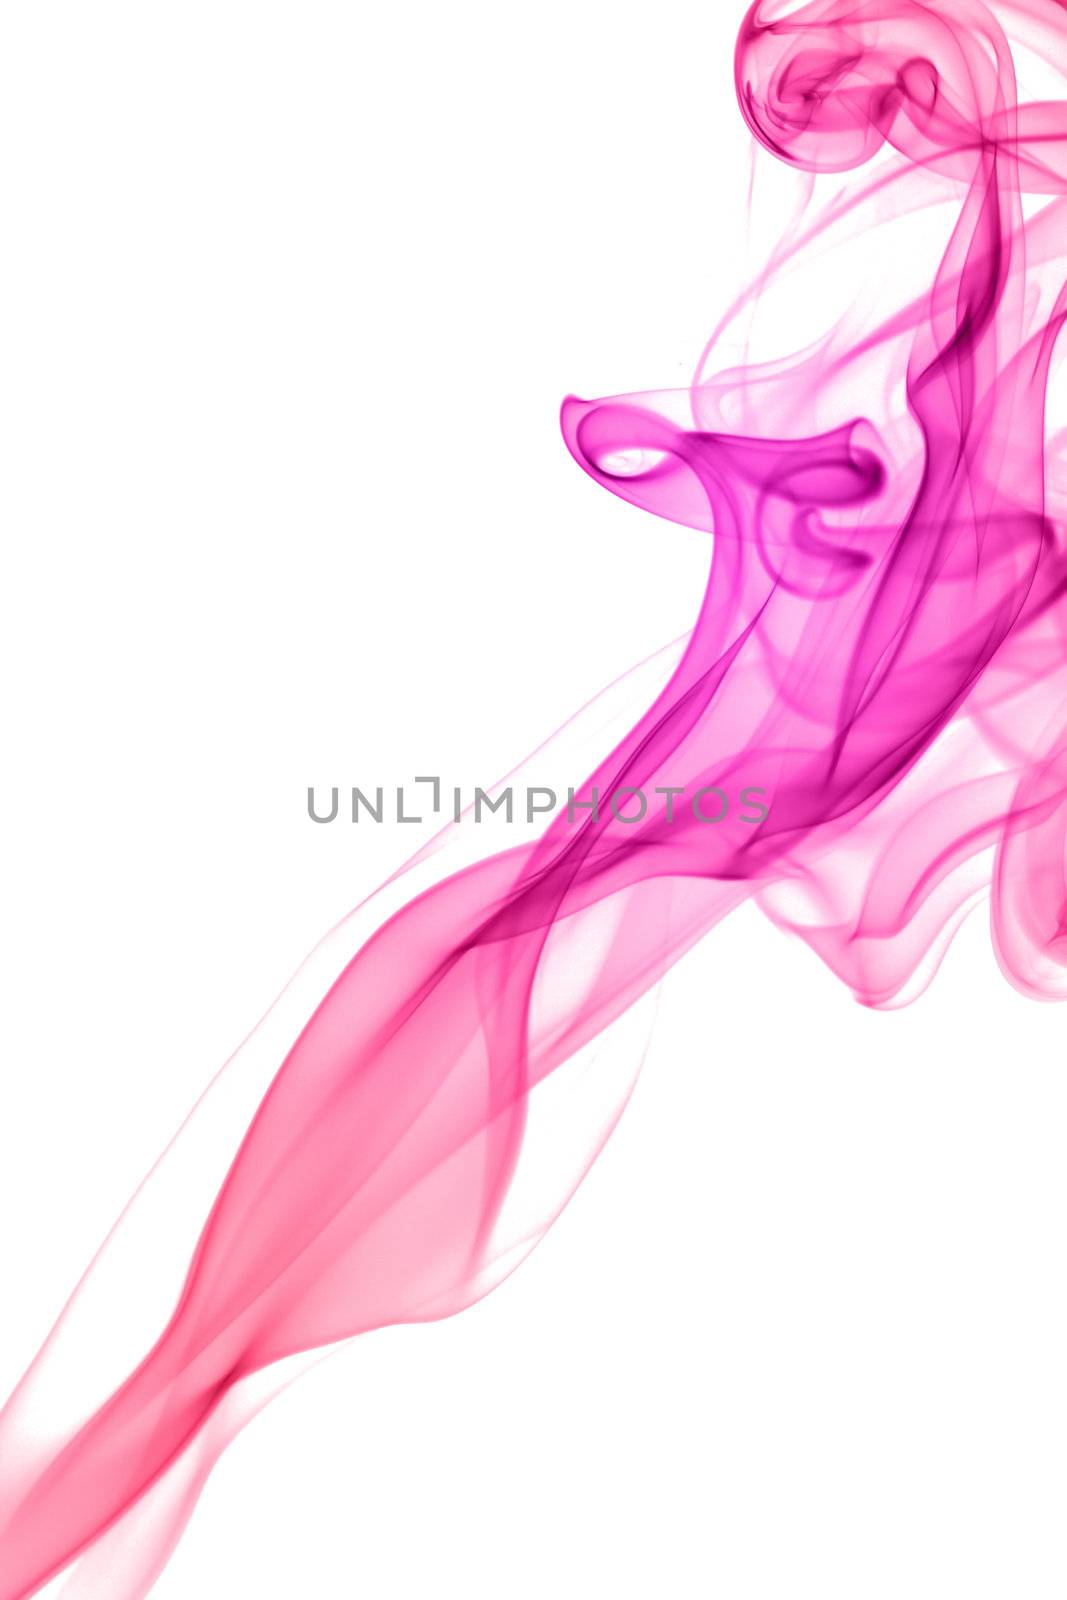 abstract pink smoke